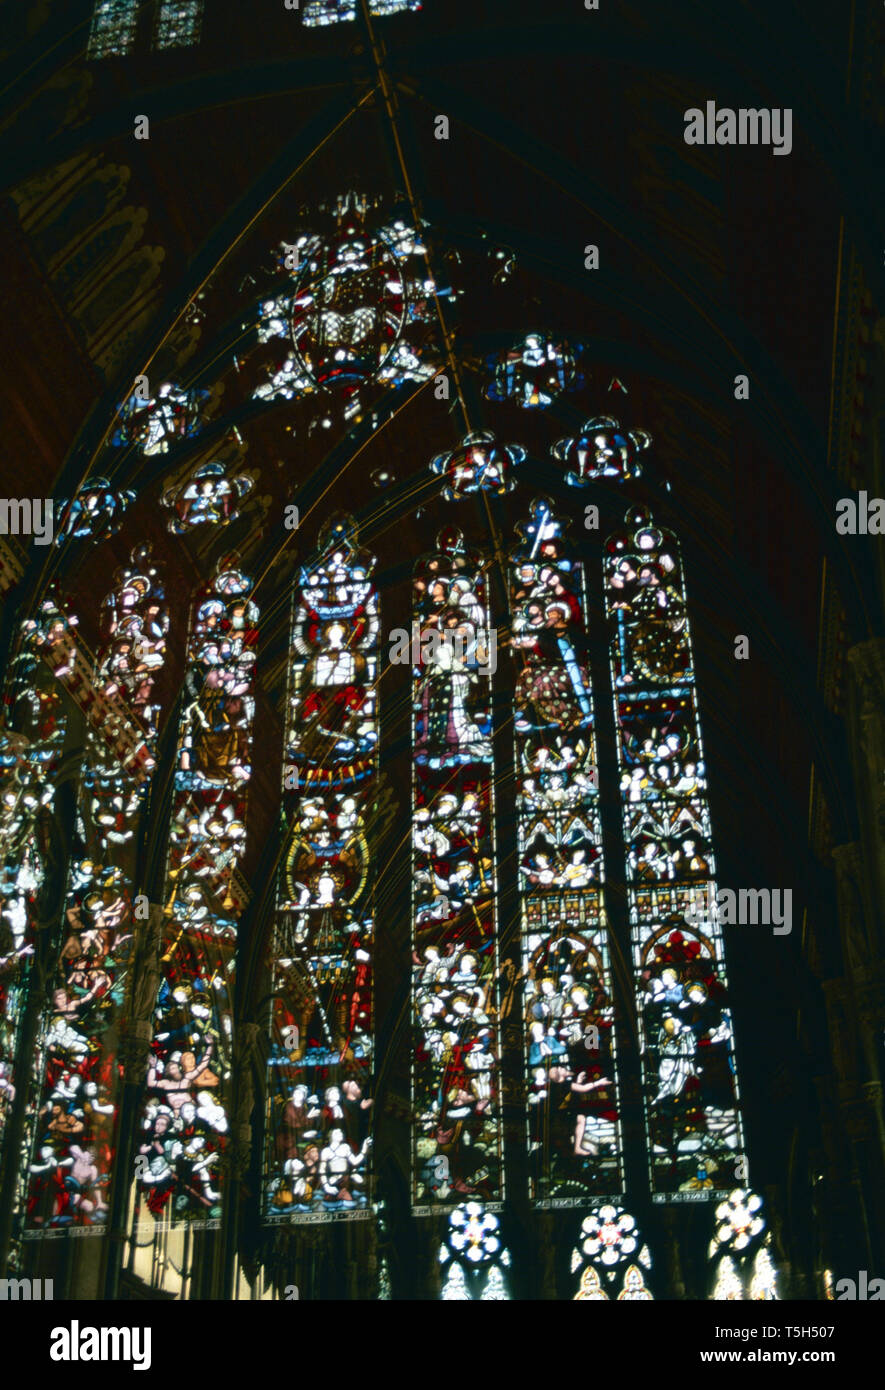 Stain glass window reflection,St.John's Chapel,Cambridge,England Stock Photo